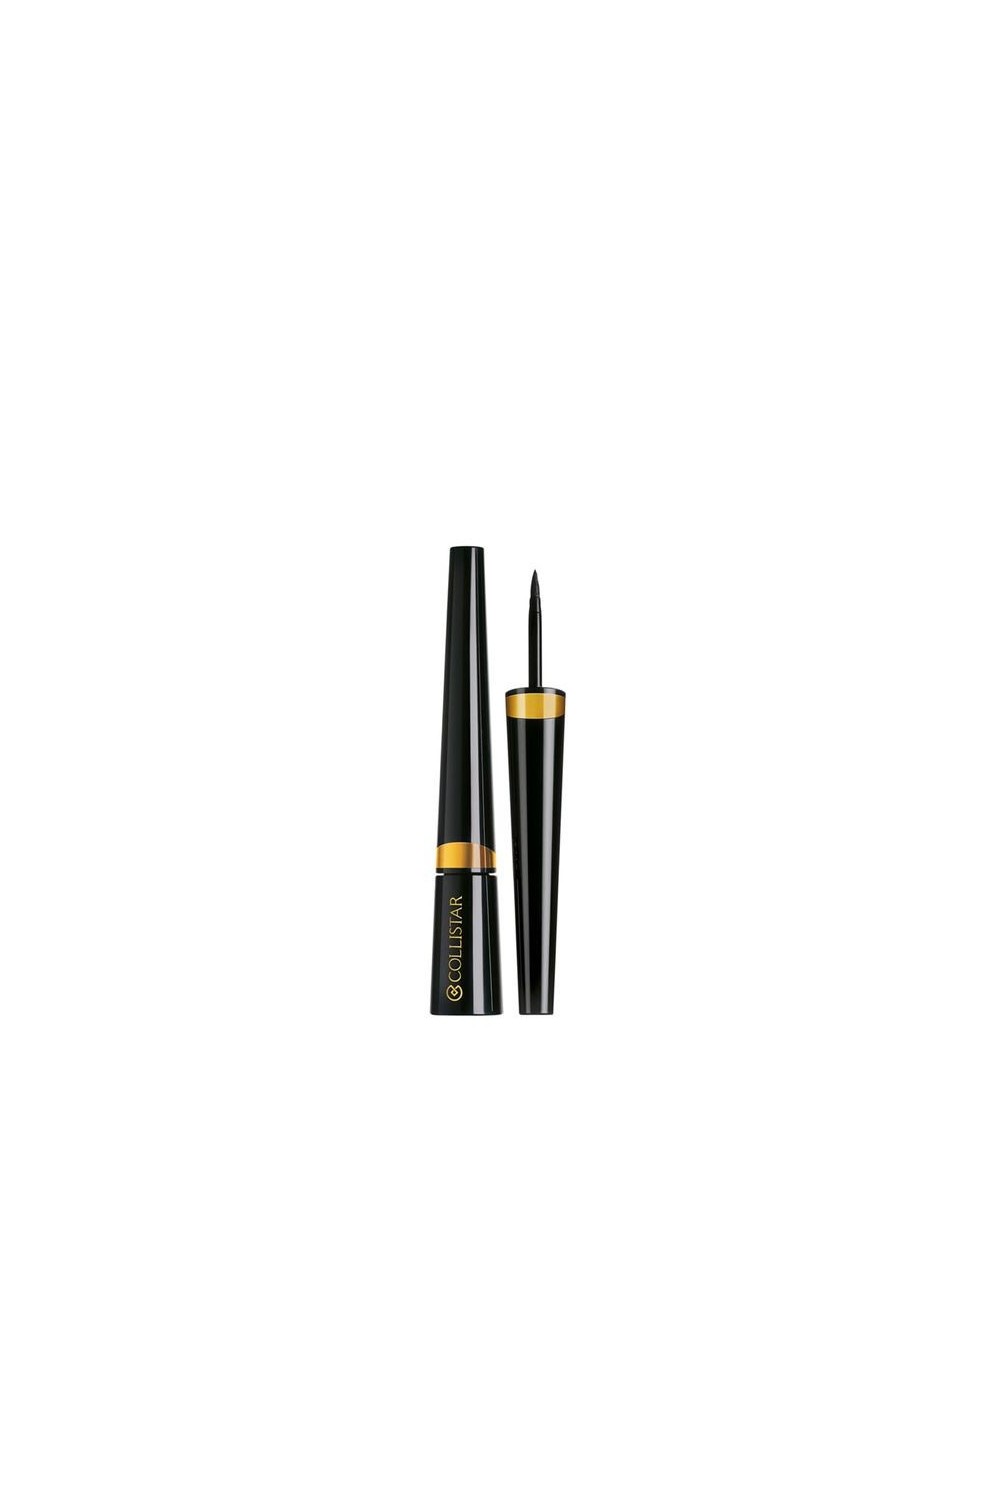 Collistar Tecnico Eye Liner Pen Applicator Waterproof  Black 2,5ml